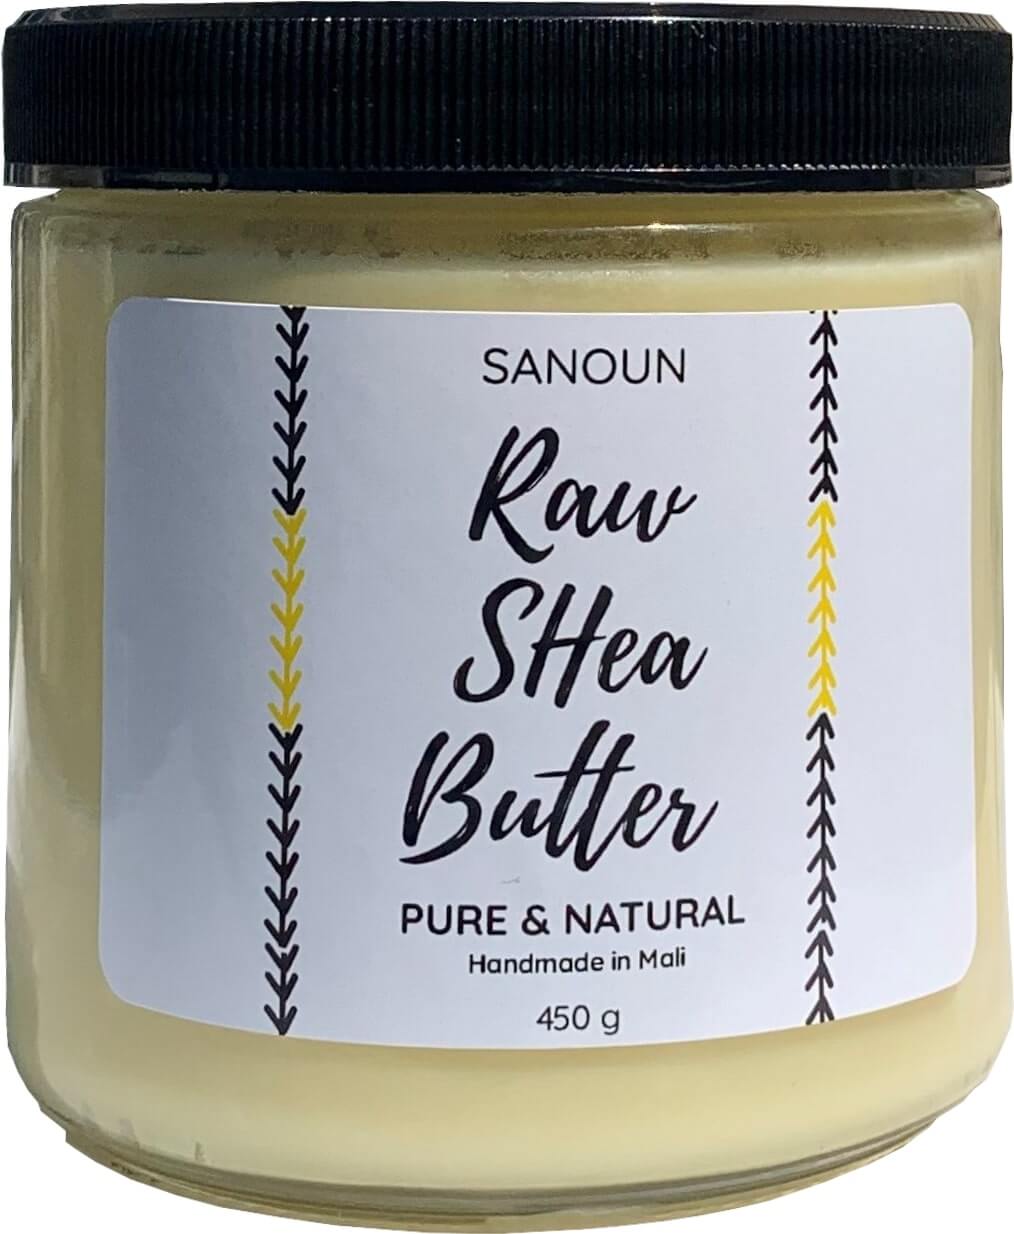 Sanoun Unrefined Shea Butter 16 oz